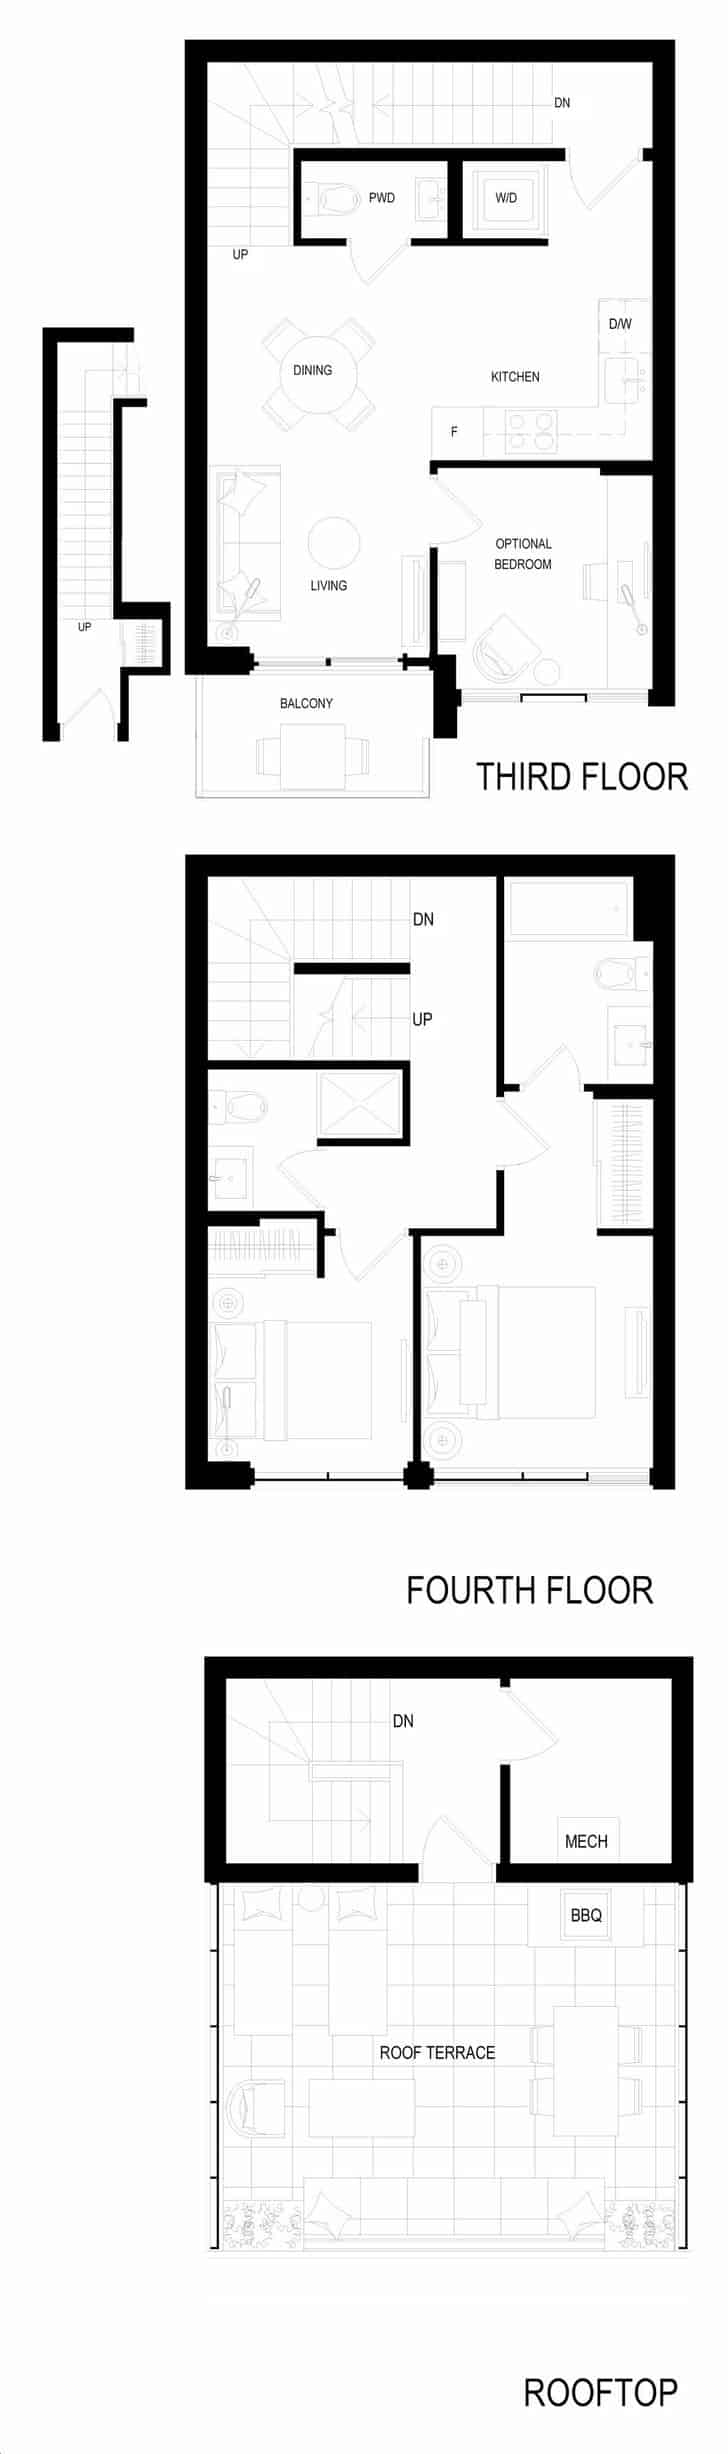 Lawrence Hill Towns Garden Suite floorplan v7 2